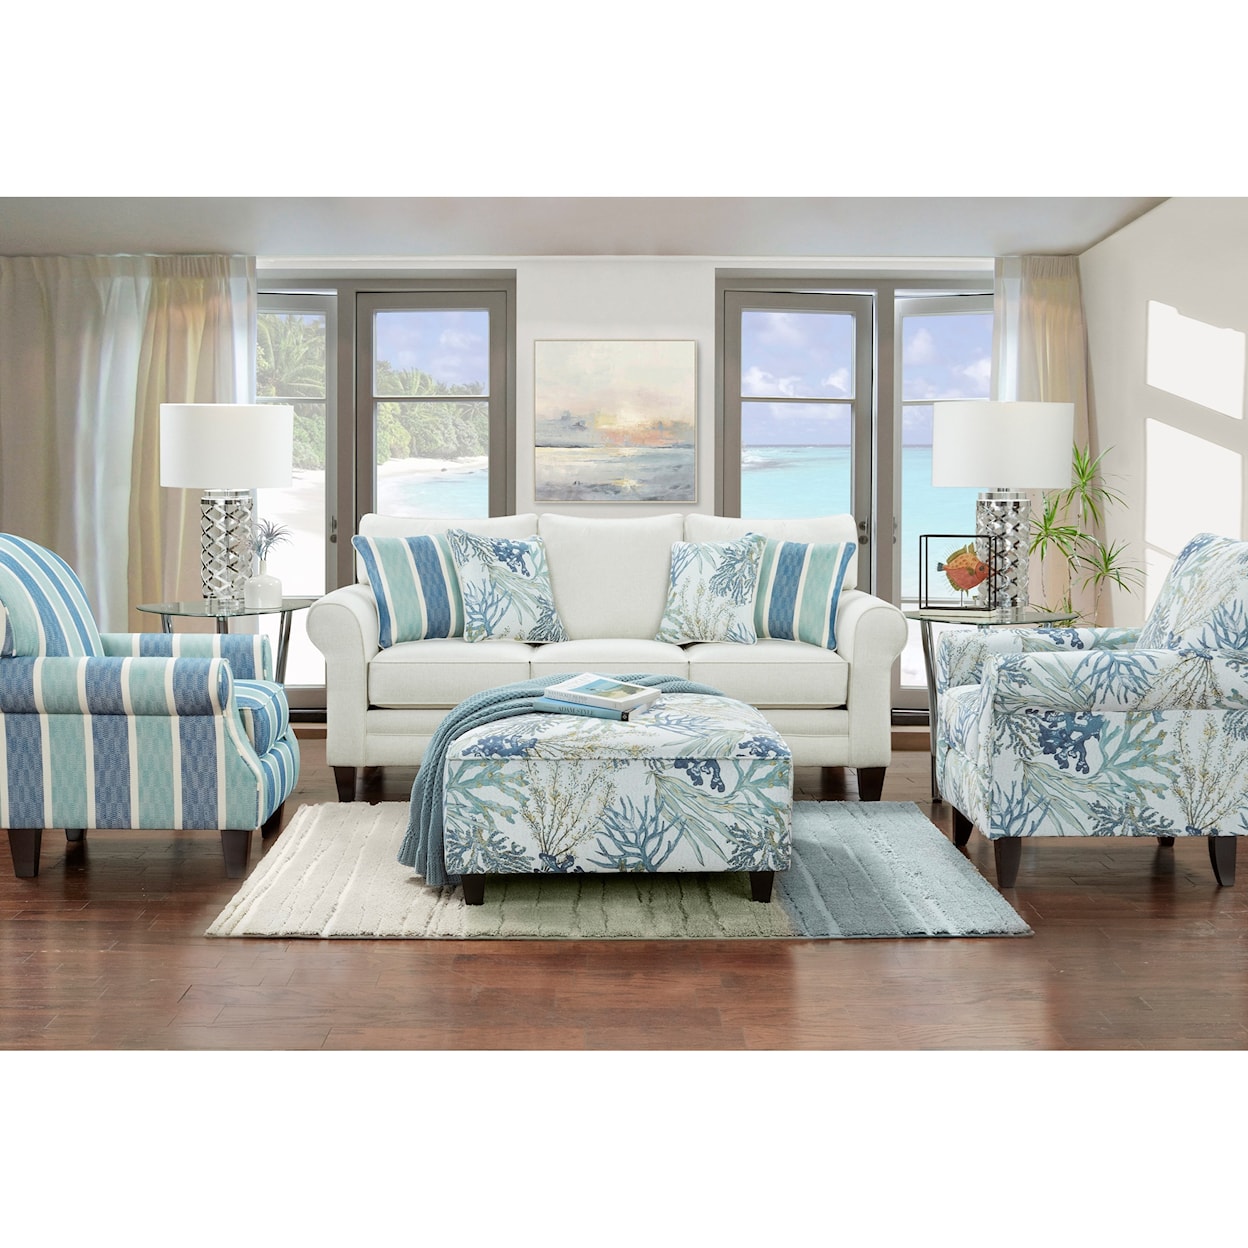 Fusion Furniture 1140 GRANDE GLACIER (REVOLUTION) Living Room Group